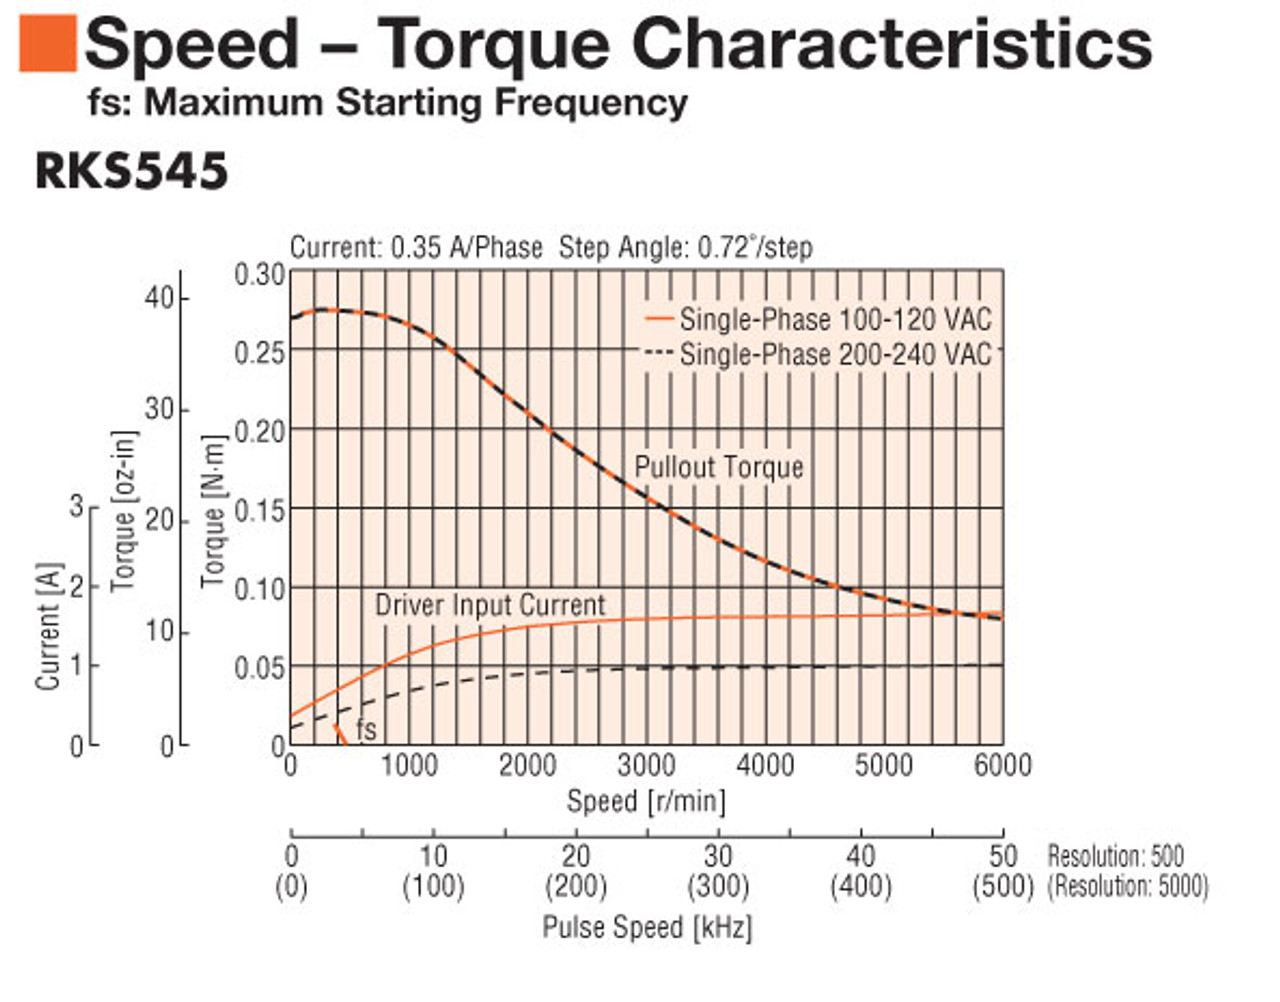 PKE545MC - Speed-Torque